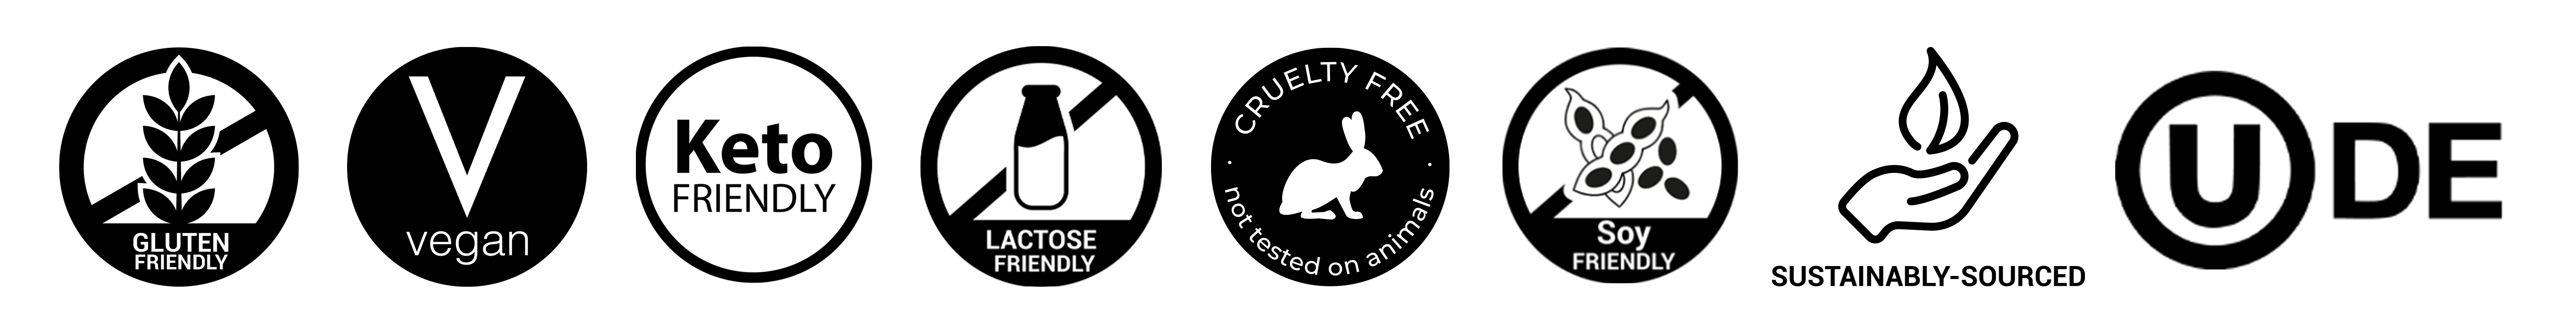 gluten free, vegan, keto friendly, lactose free, cruelty free, sustainably sourced